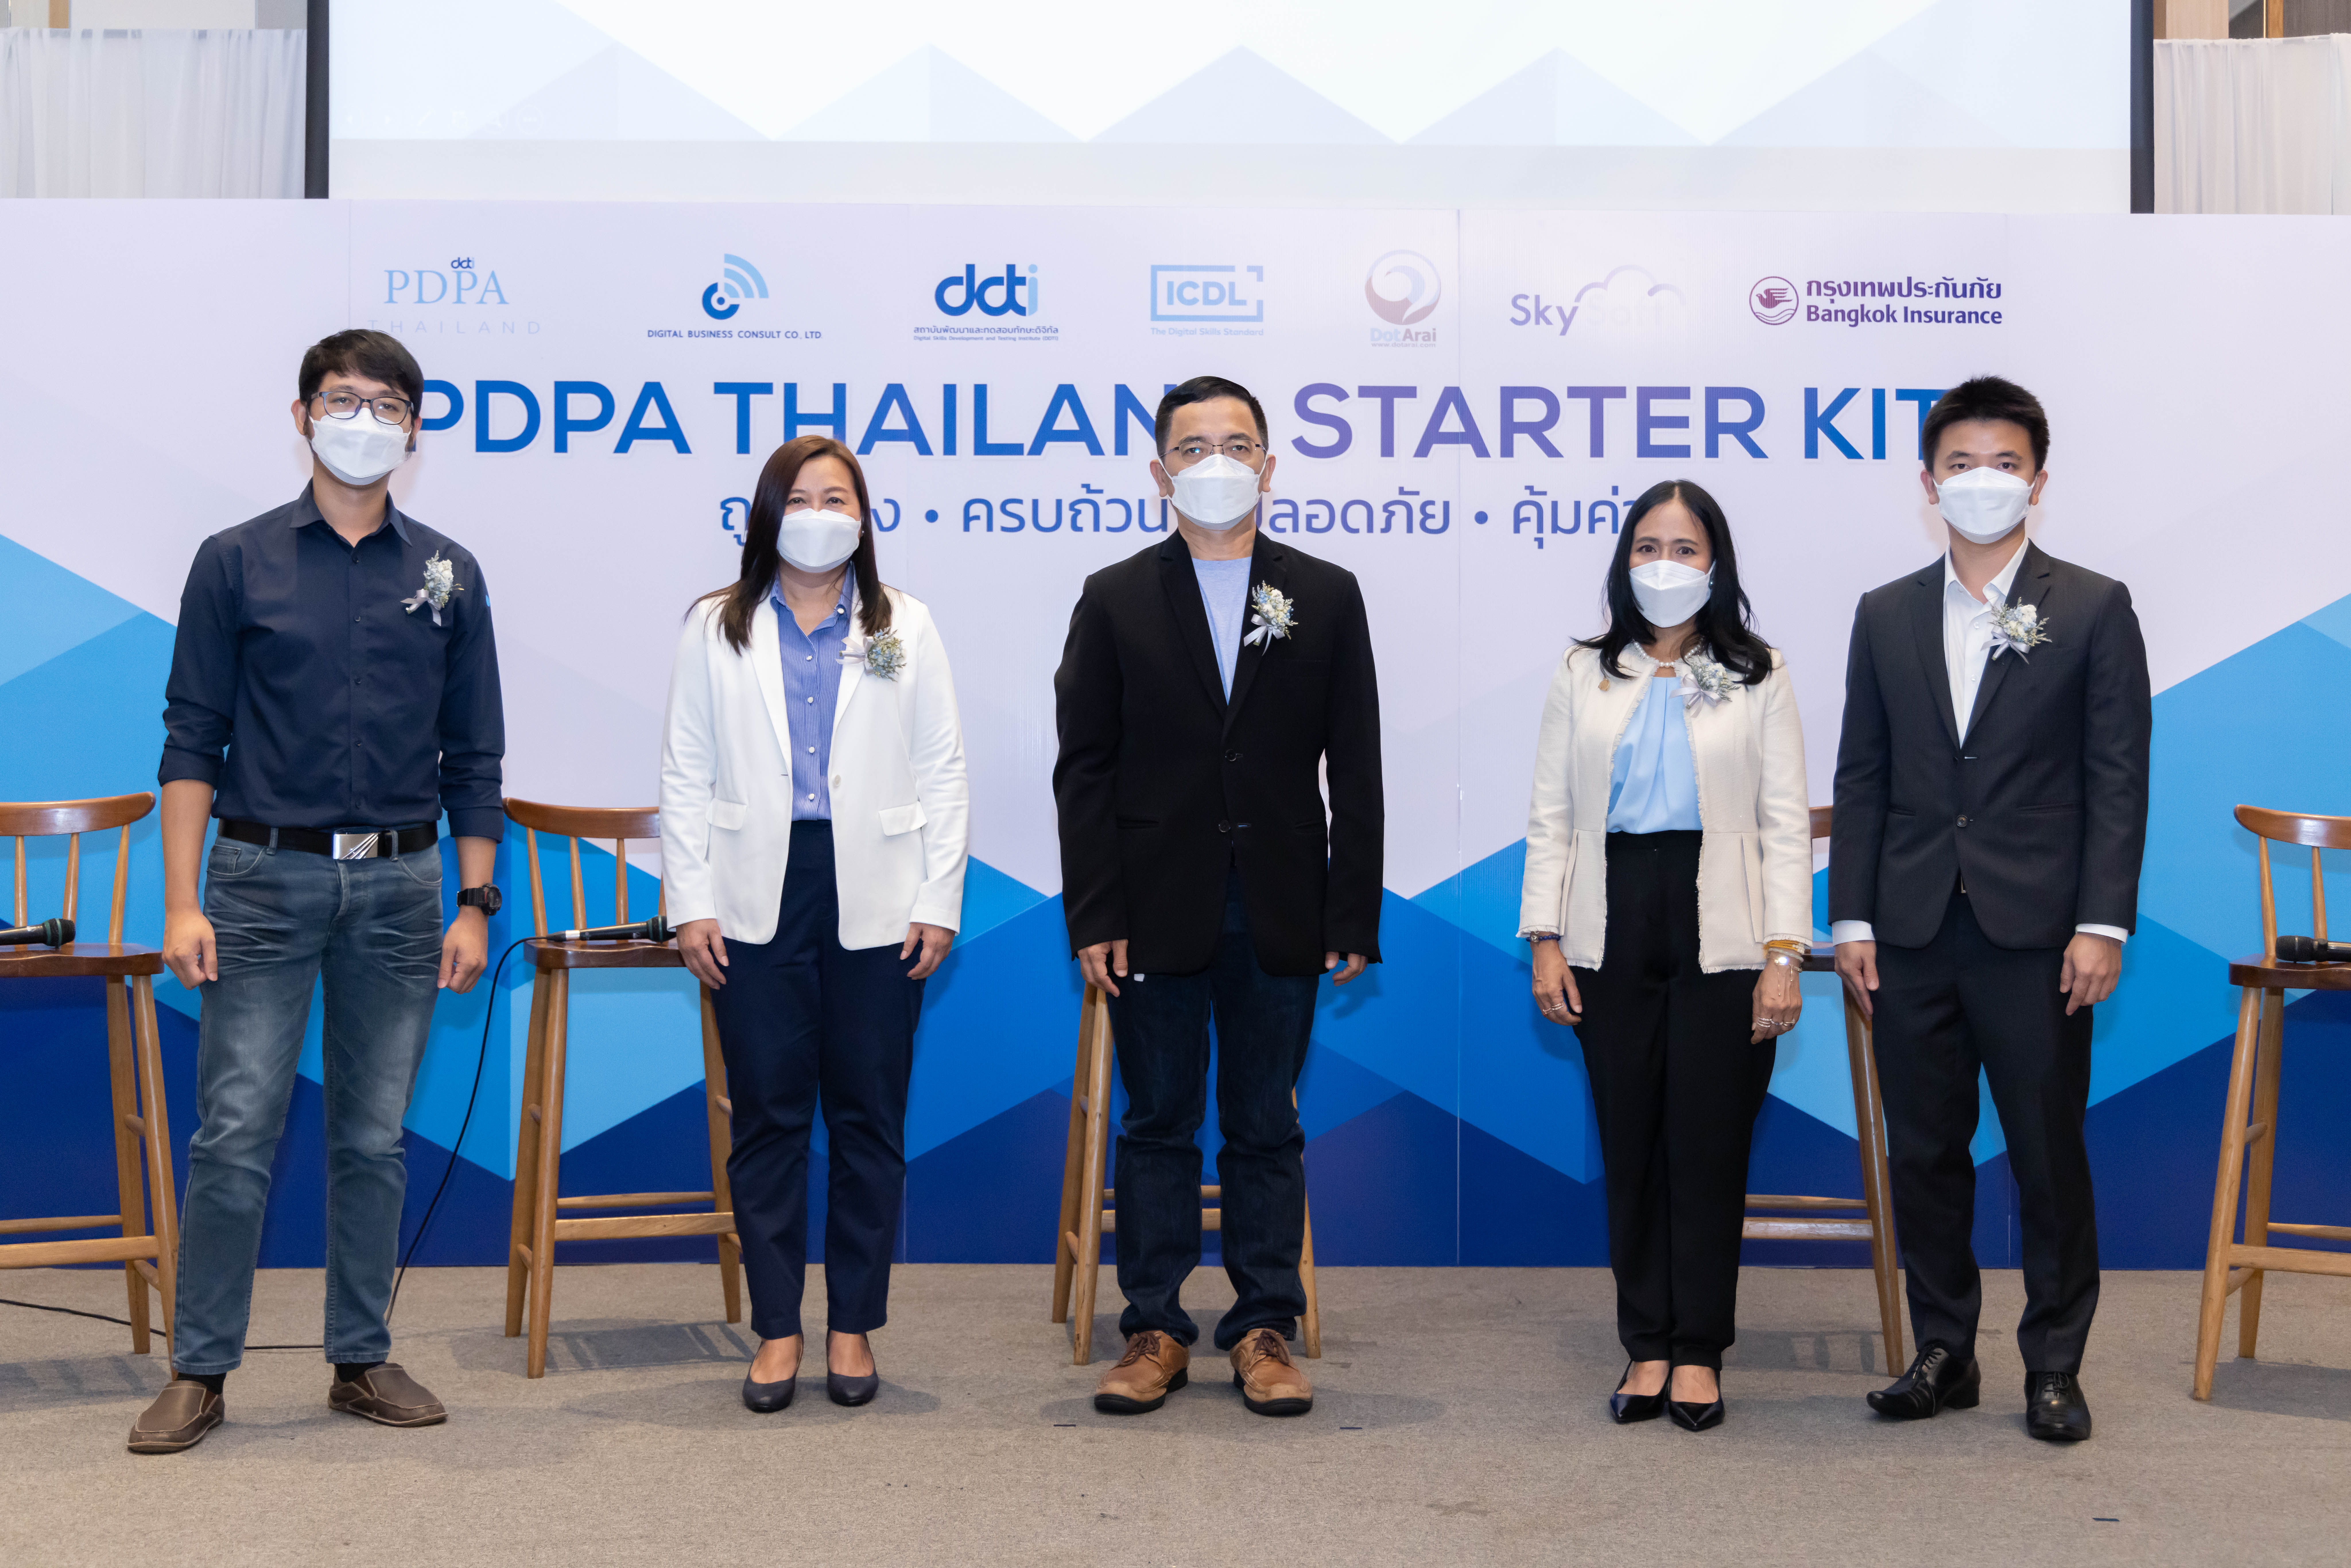 PDPA Thailand Starter Kit เปิดตัวสุดแกร่งเพื่อ SMEs